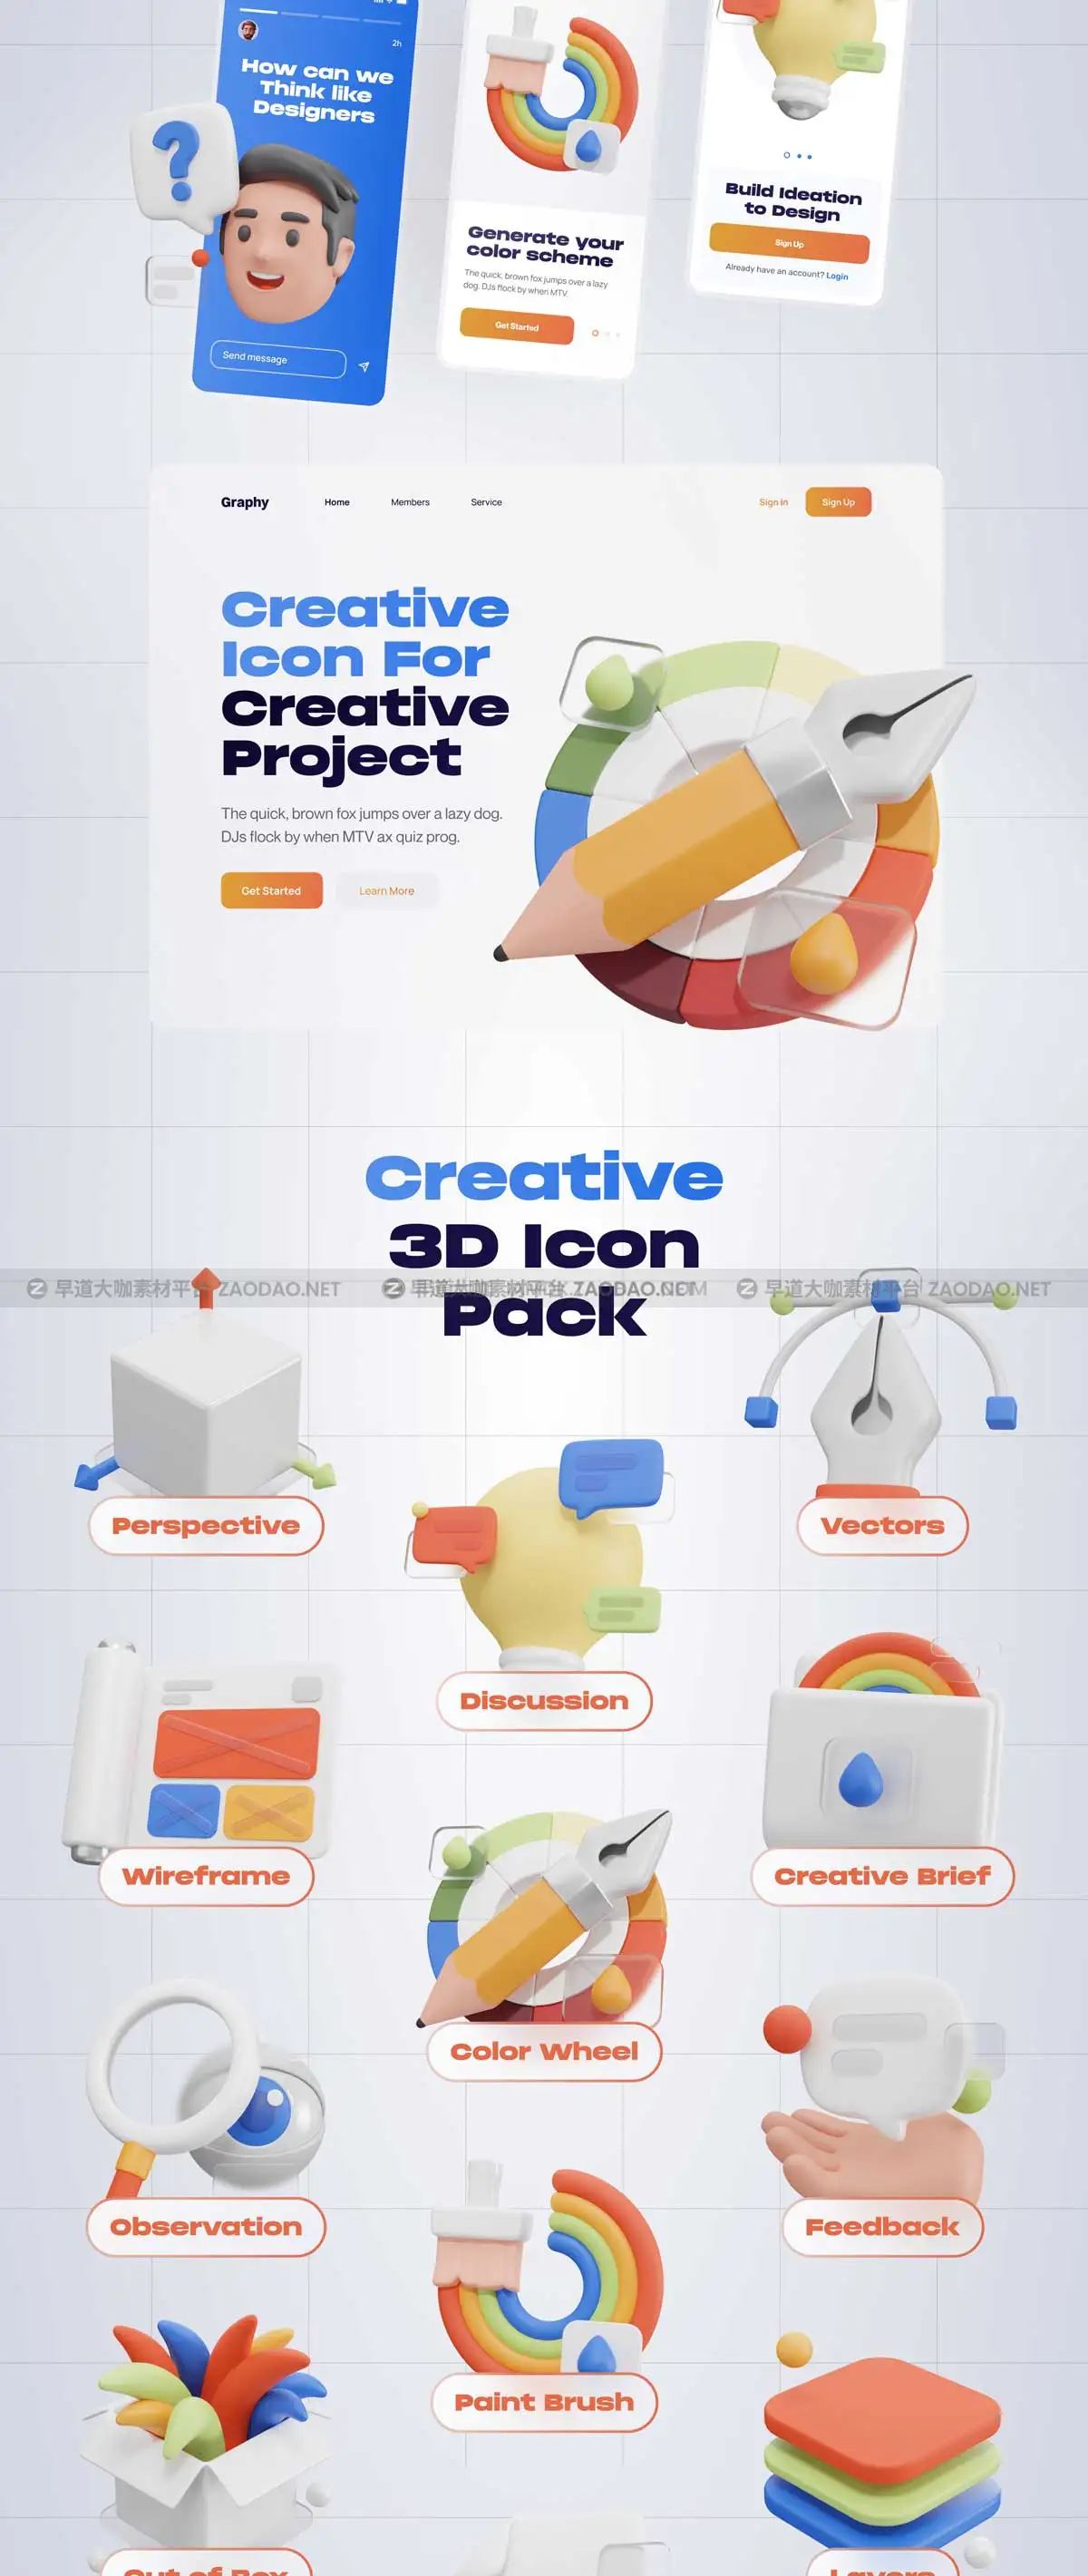 Blender模型 20款创意卡通3D立体设计师灵感制图绘画插图插画设计素材 Graphy – Graphic Design 3D Icon Set插图2